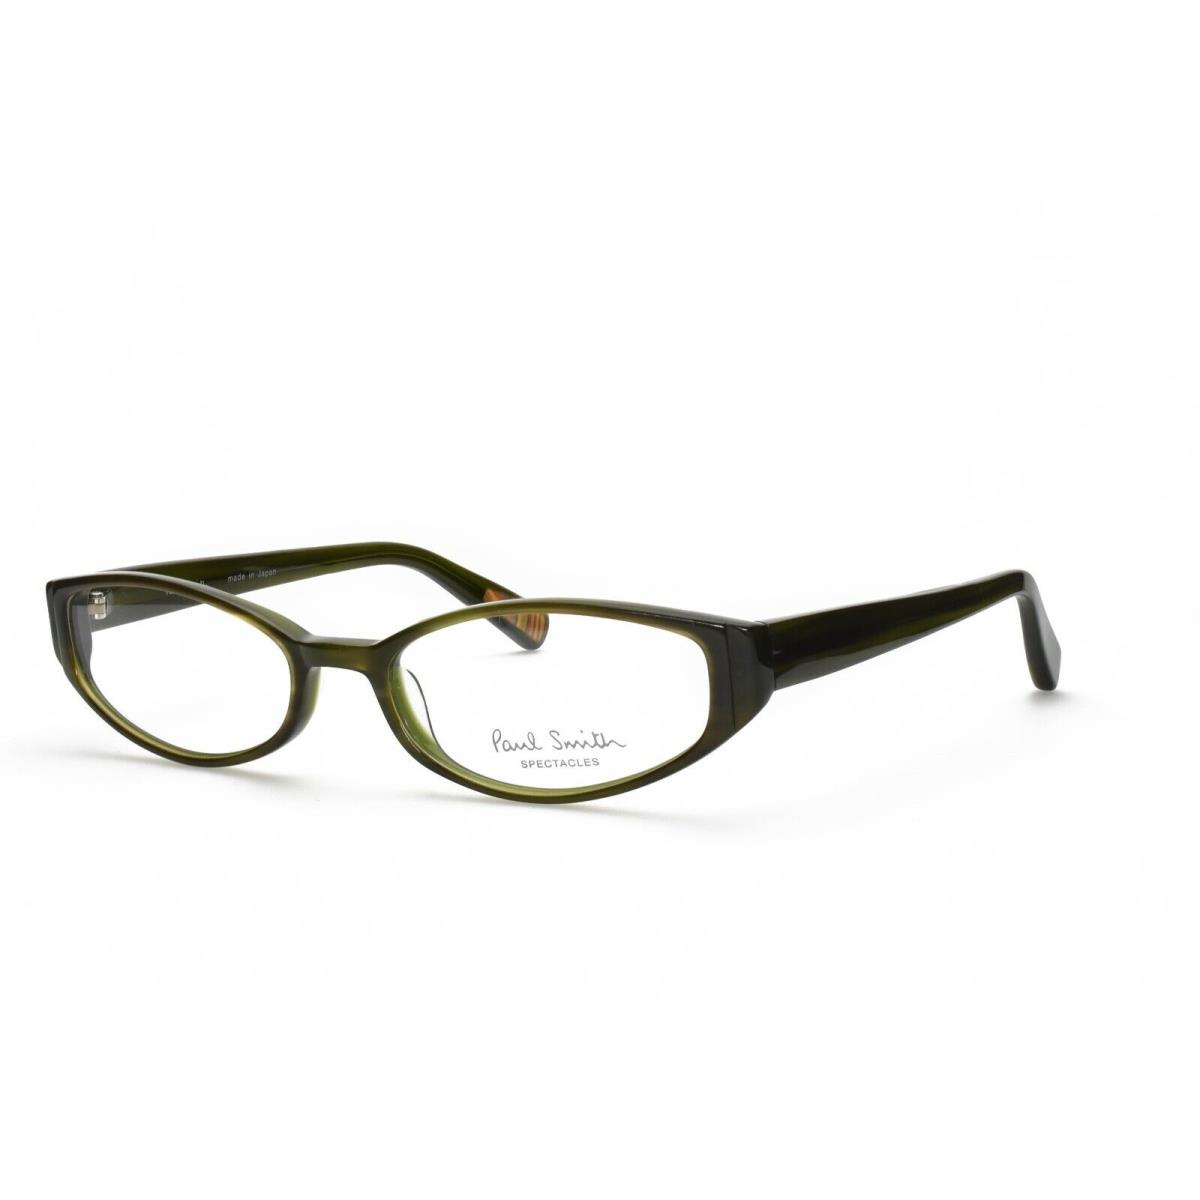 Paul Smith PS 281 Env Eyeglasses Frames Only 51-17-135